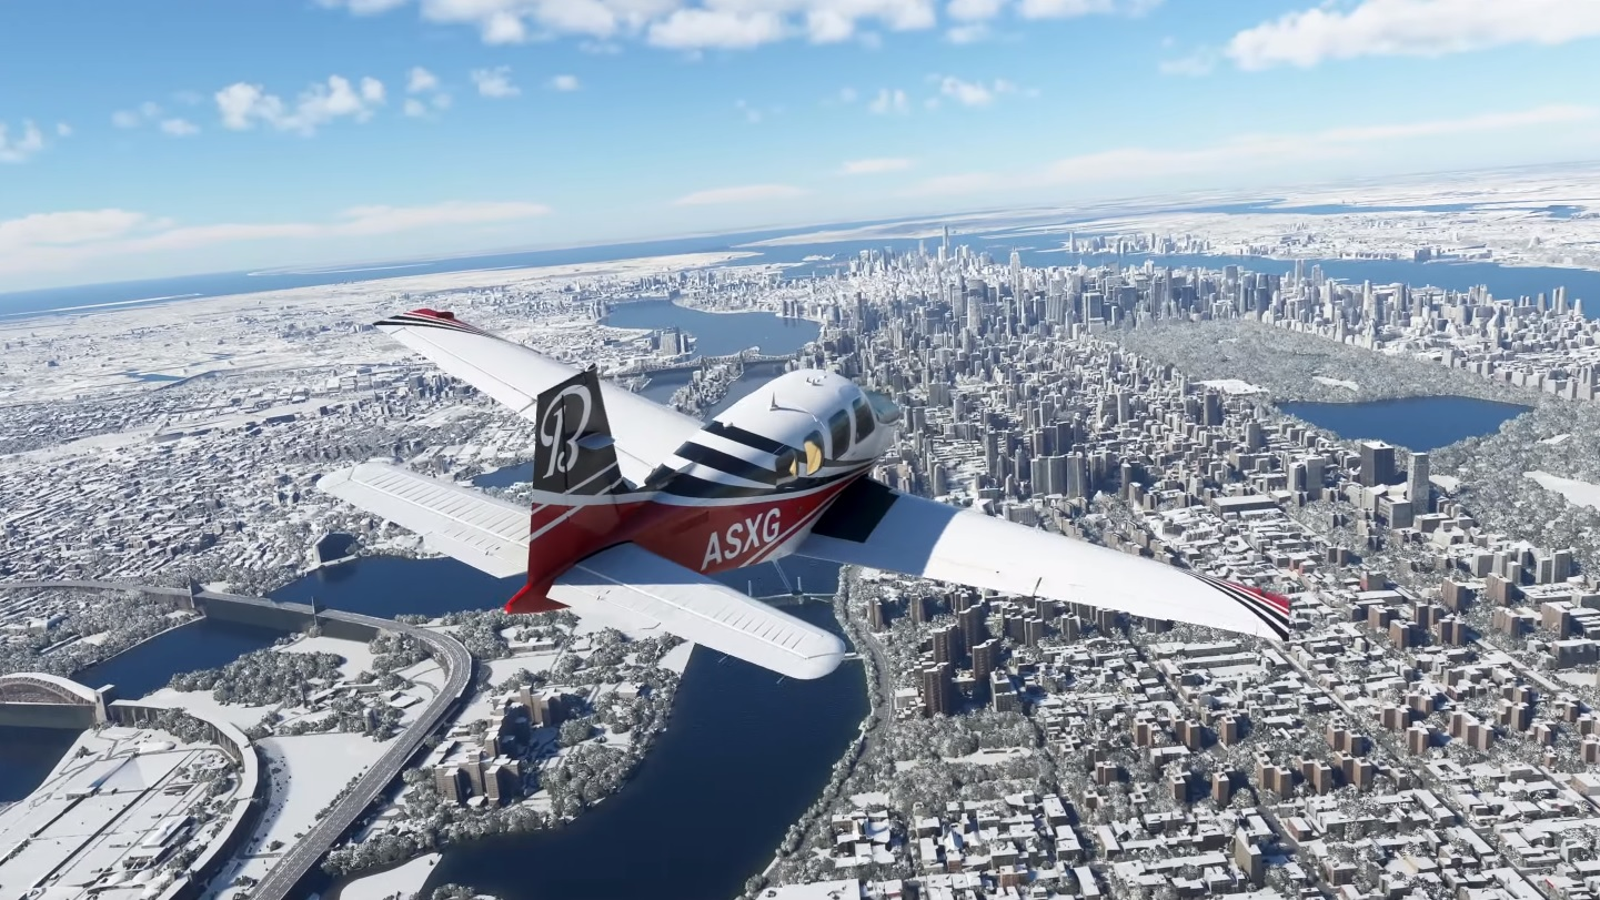 Microsoft Flight Simulator 2020: Everything We Know